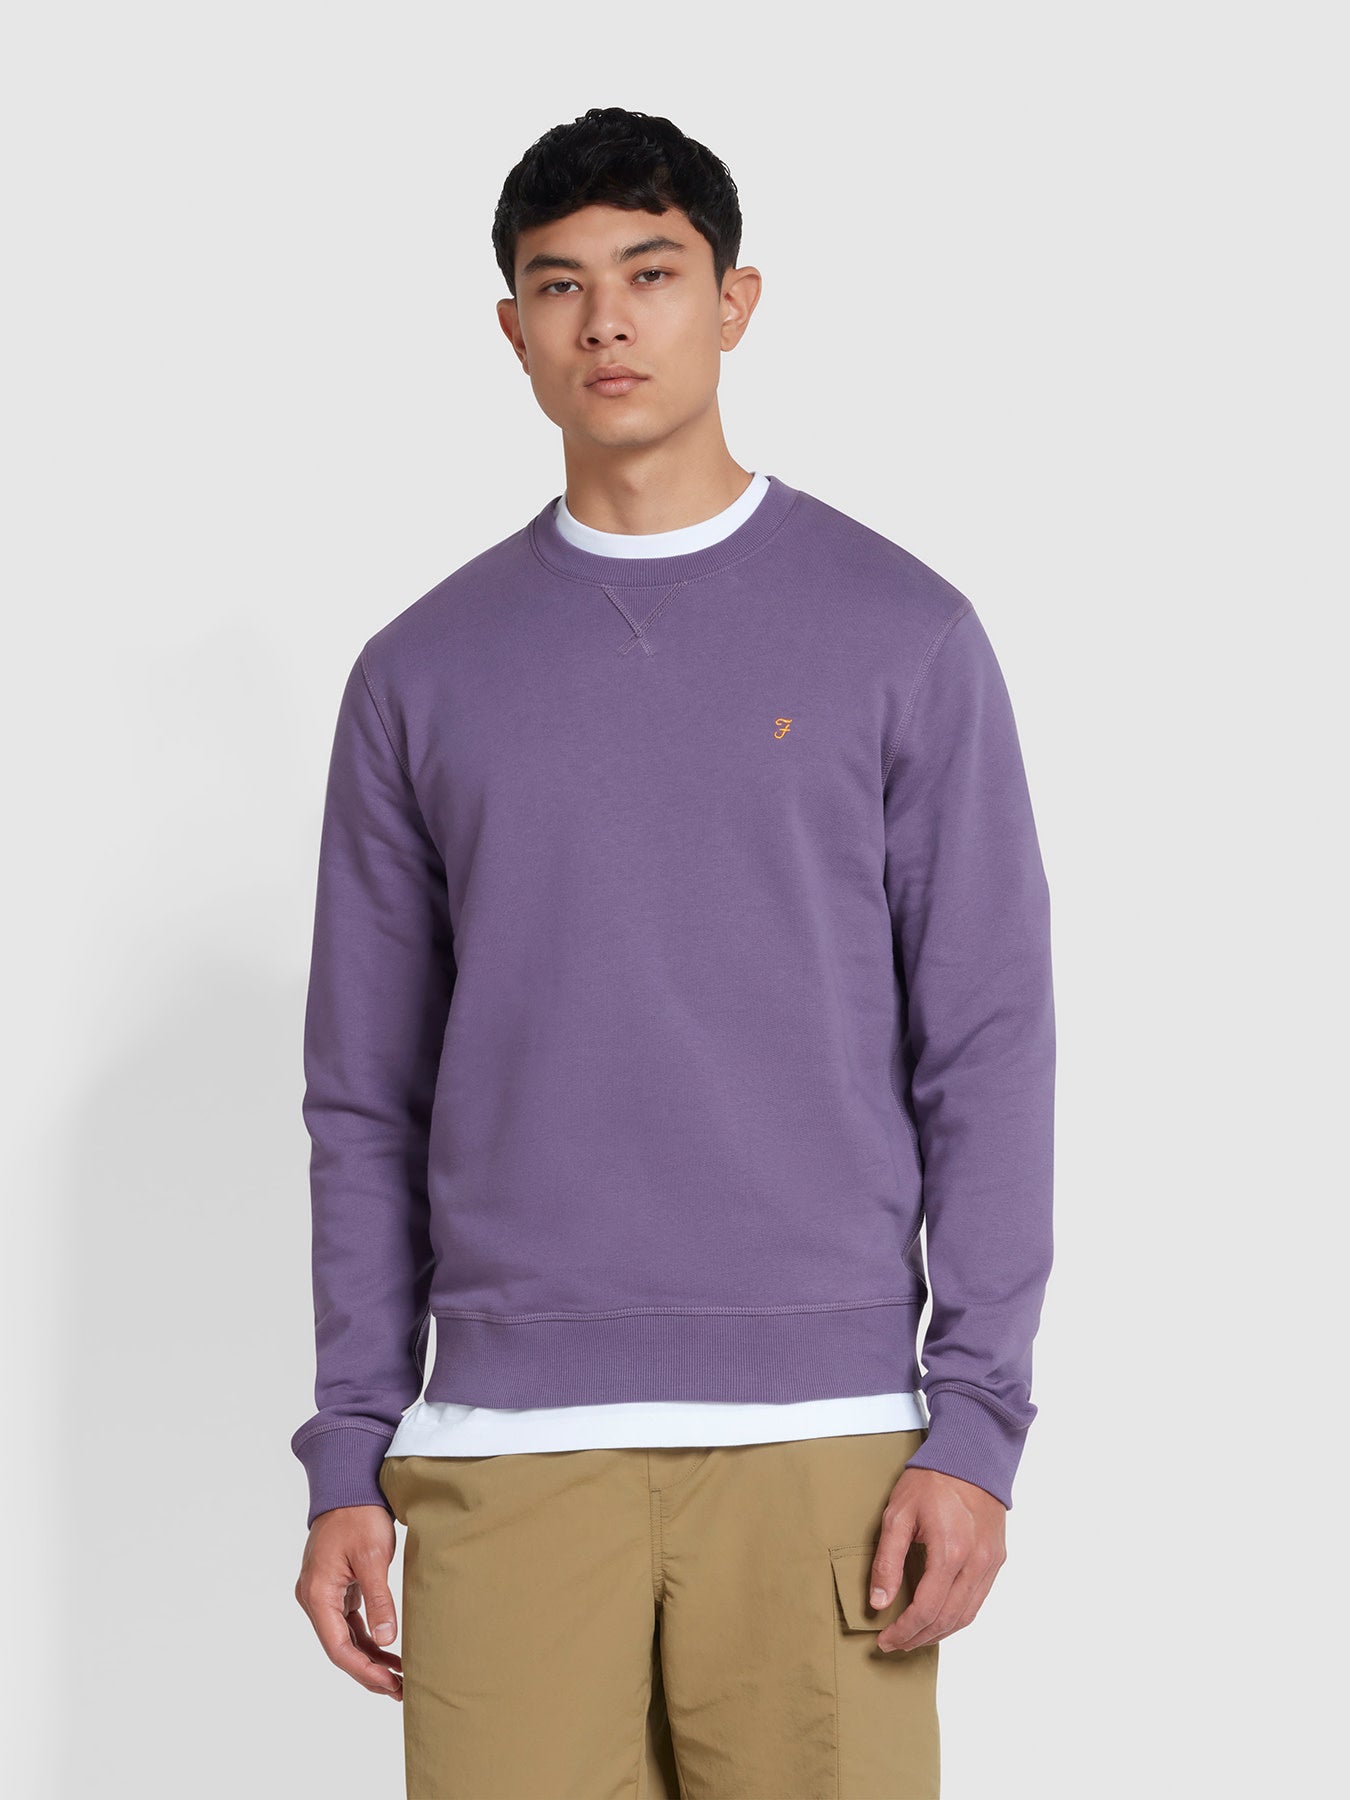 View Tim Organic Cotton Crew Neck Sweatshirt In Slate Purple information